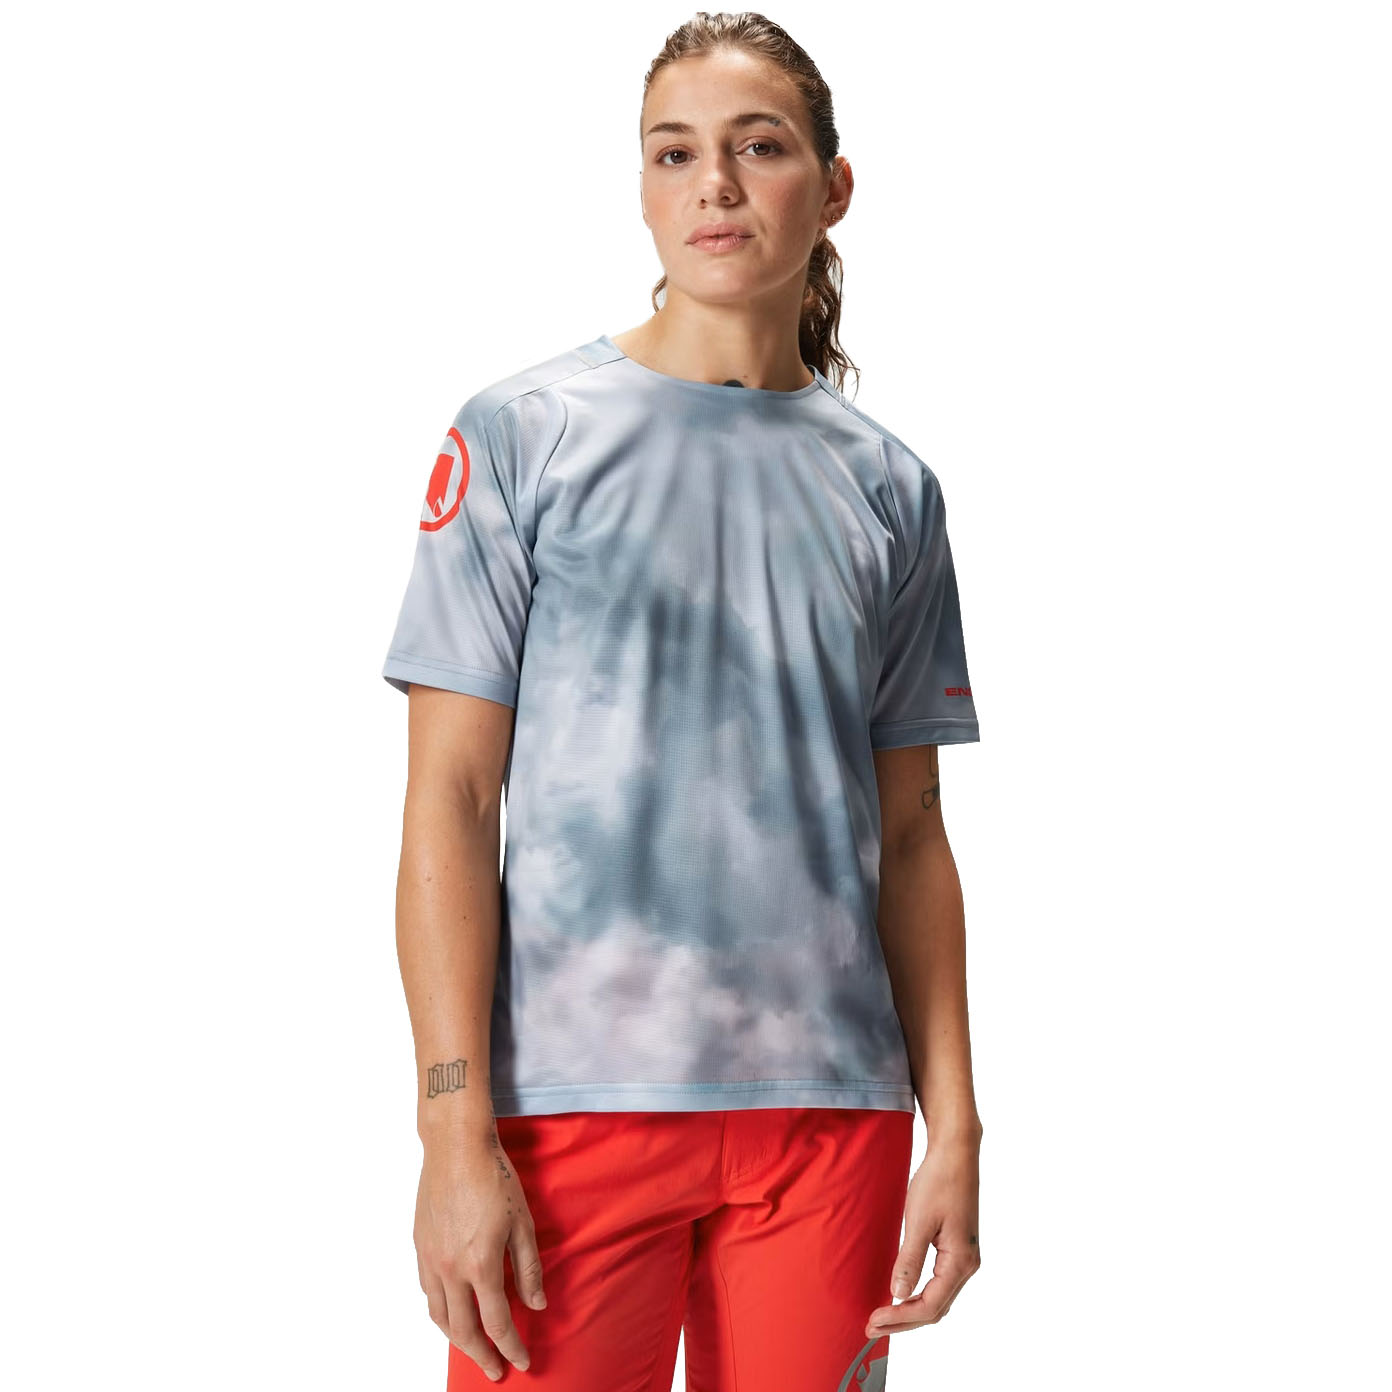 Produktbild von Endura Cloud LTD T-Shirt Damen - grau